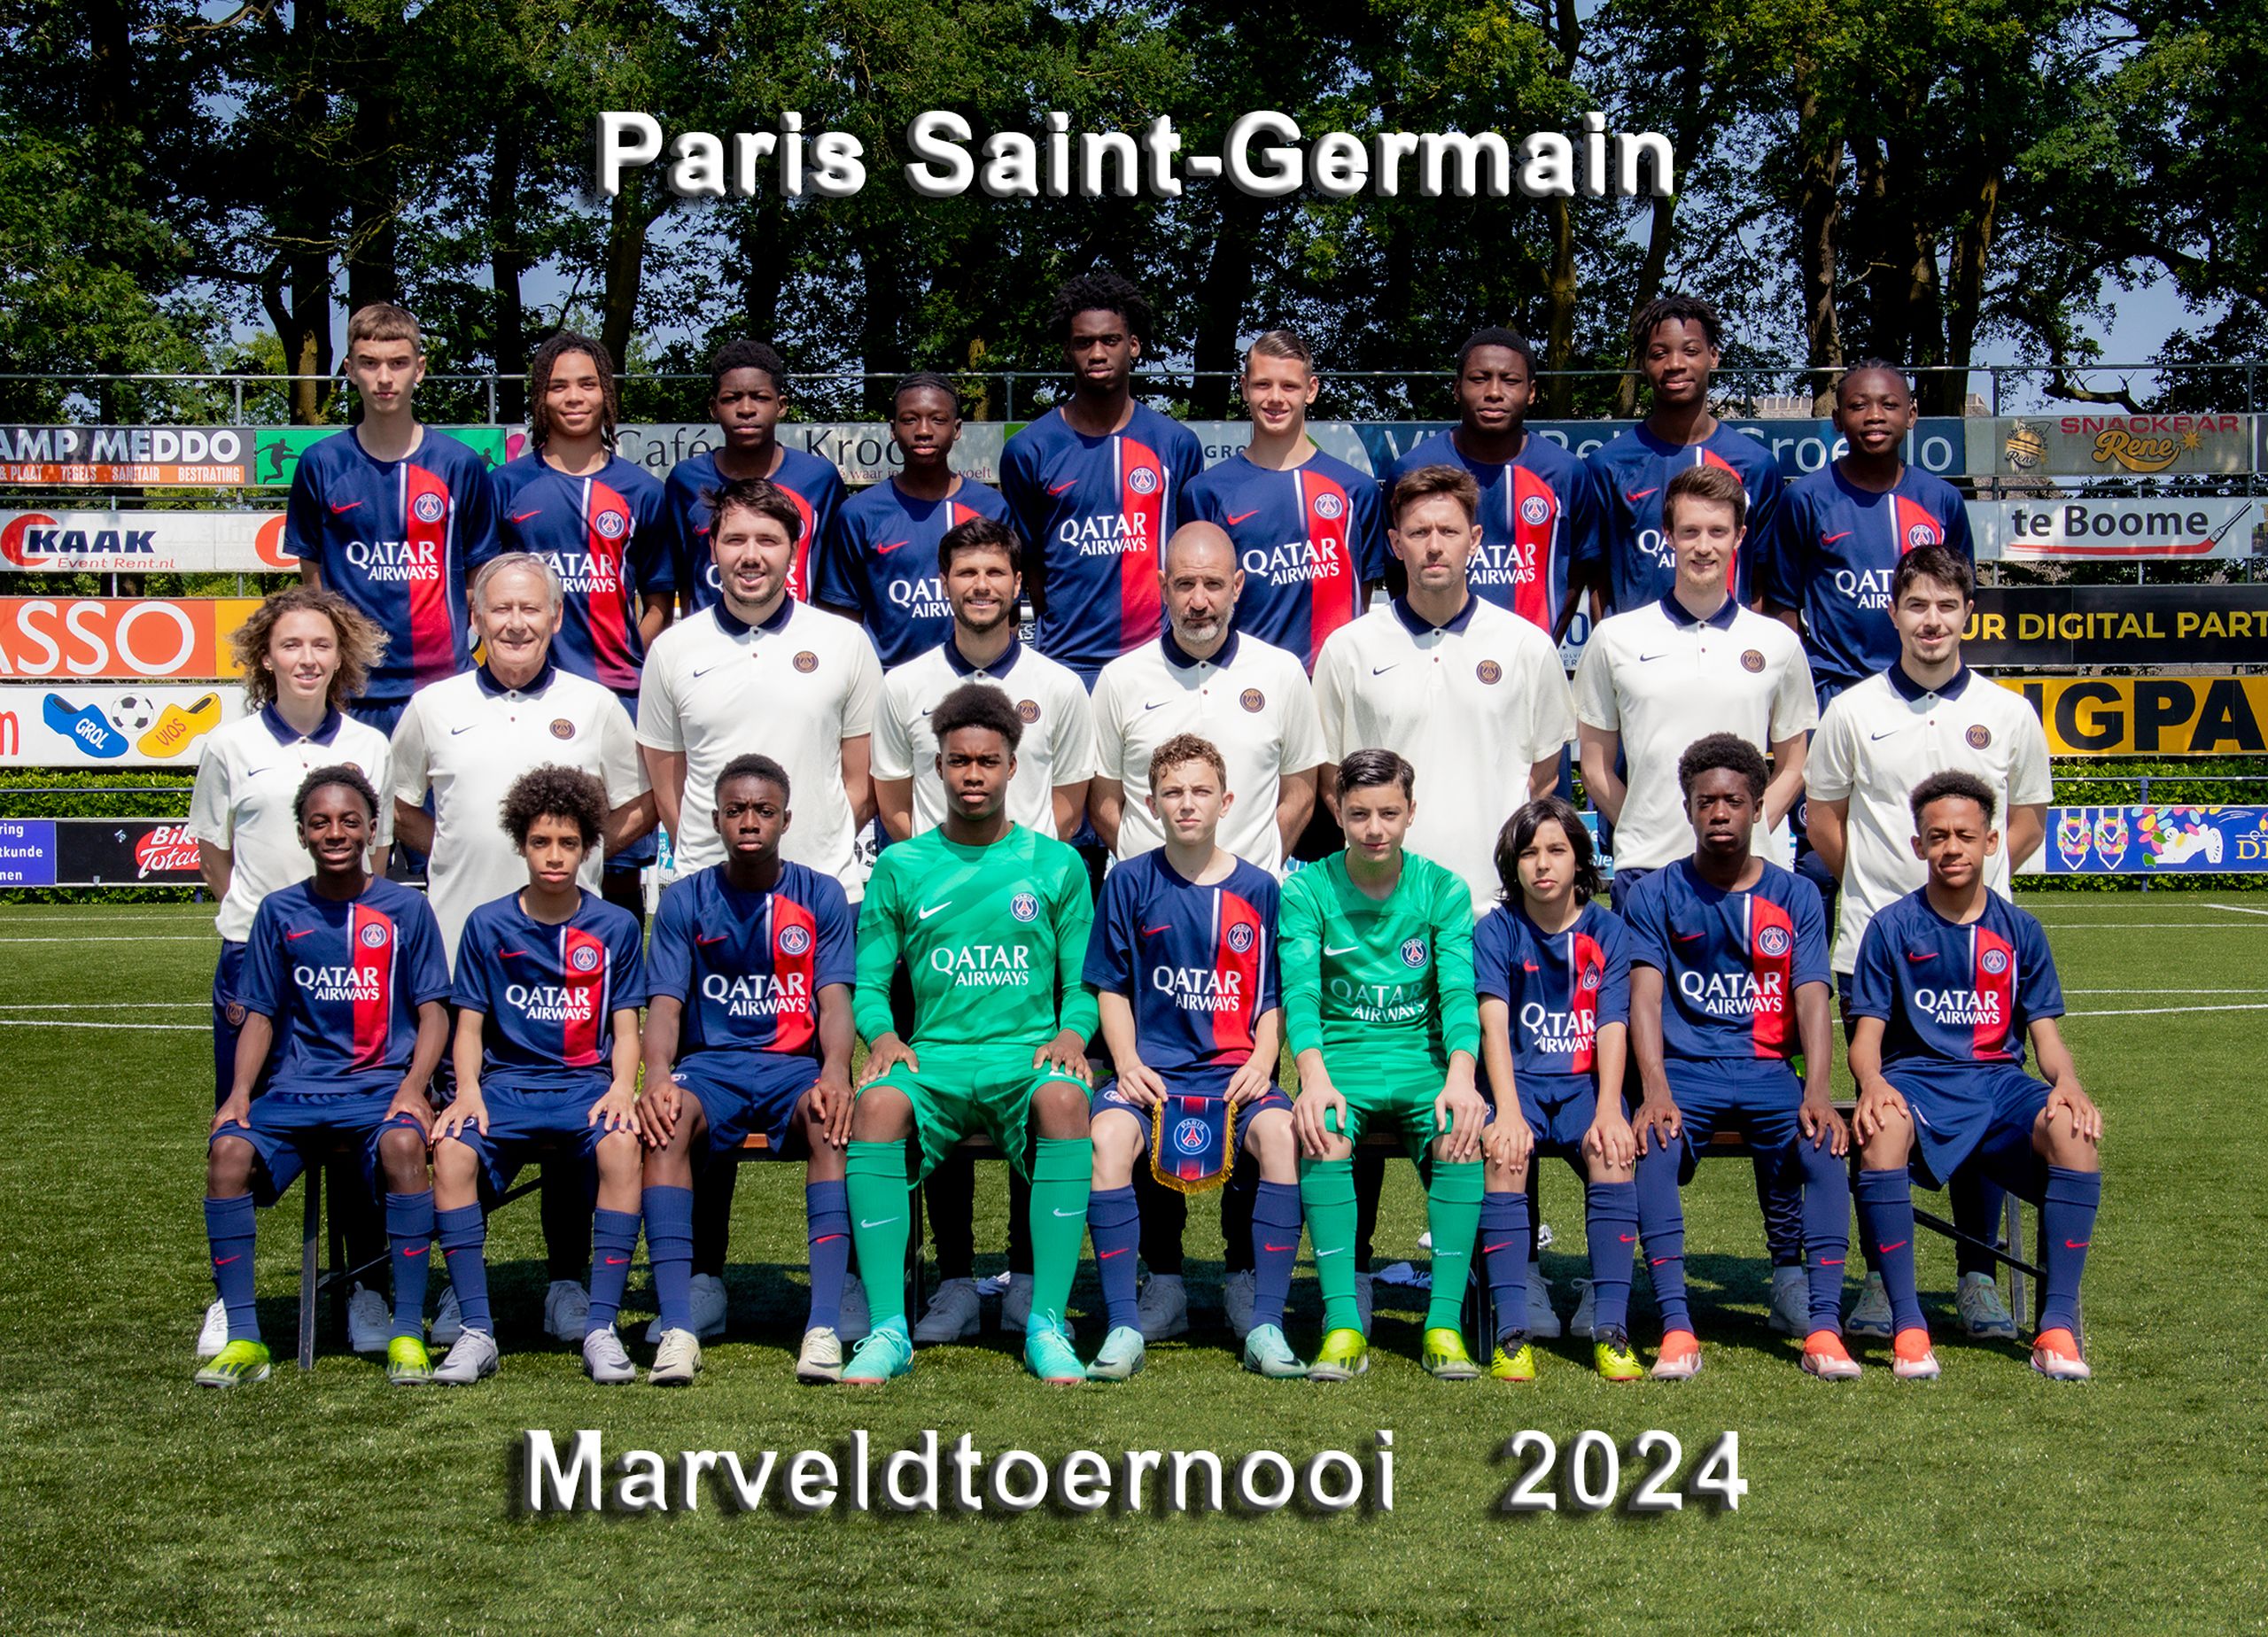 Marveld Tournament 2024 - Team Pari Saint-Germain